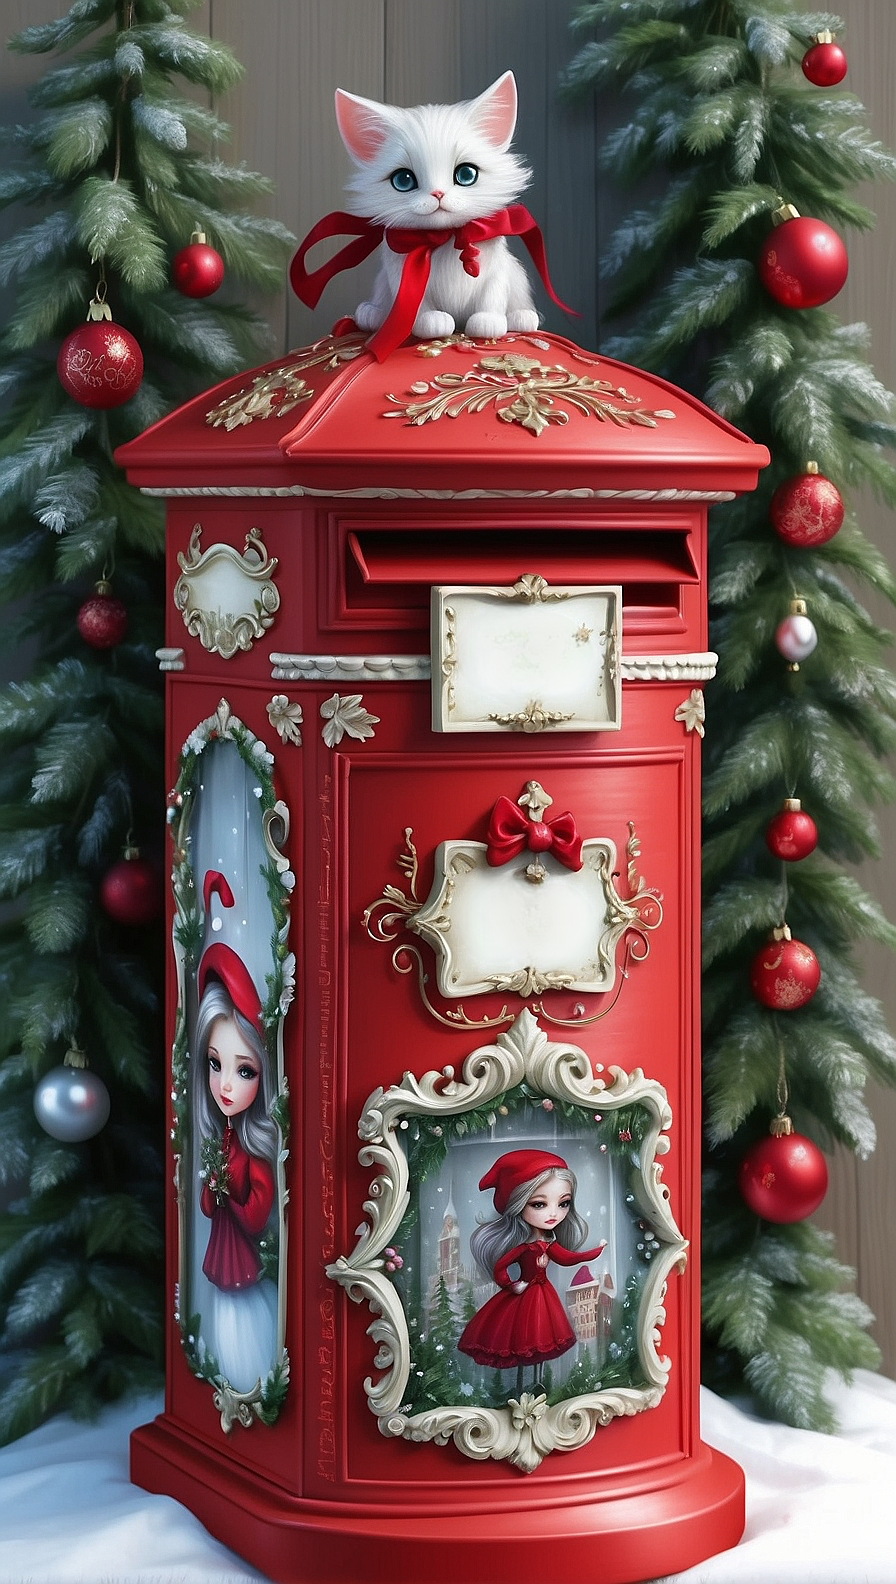 Christmas Mail Box - 2 by deezaster on DeviantArt